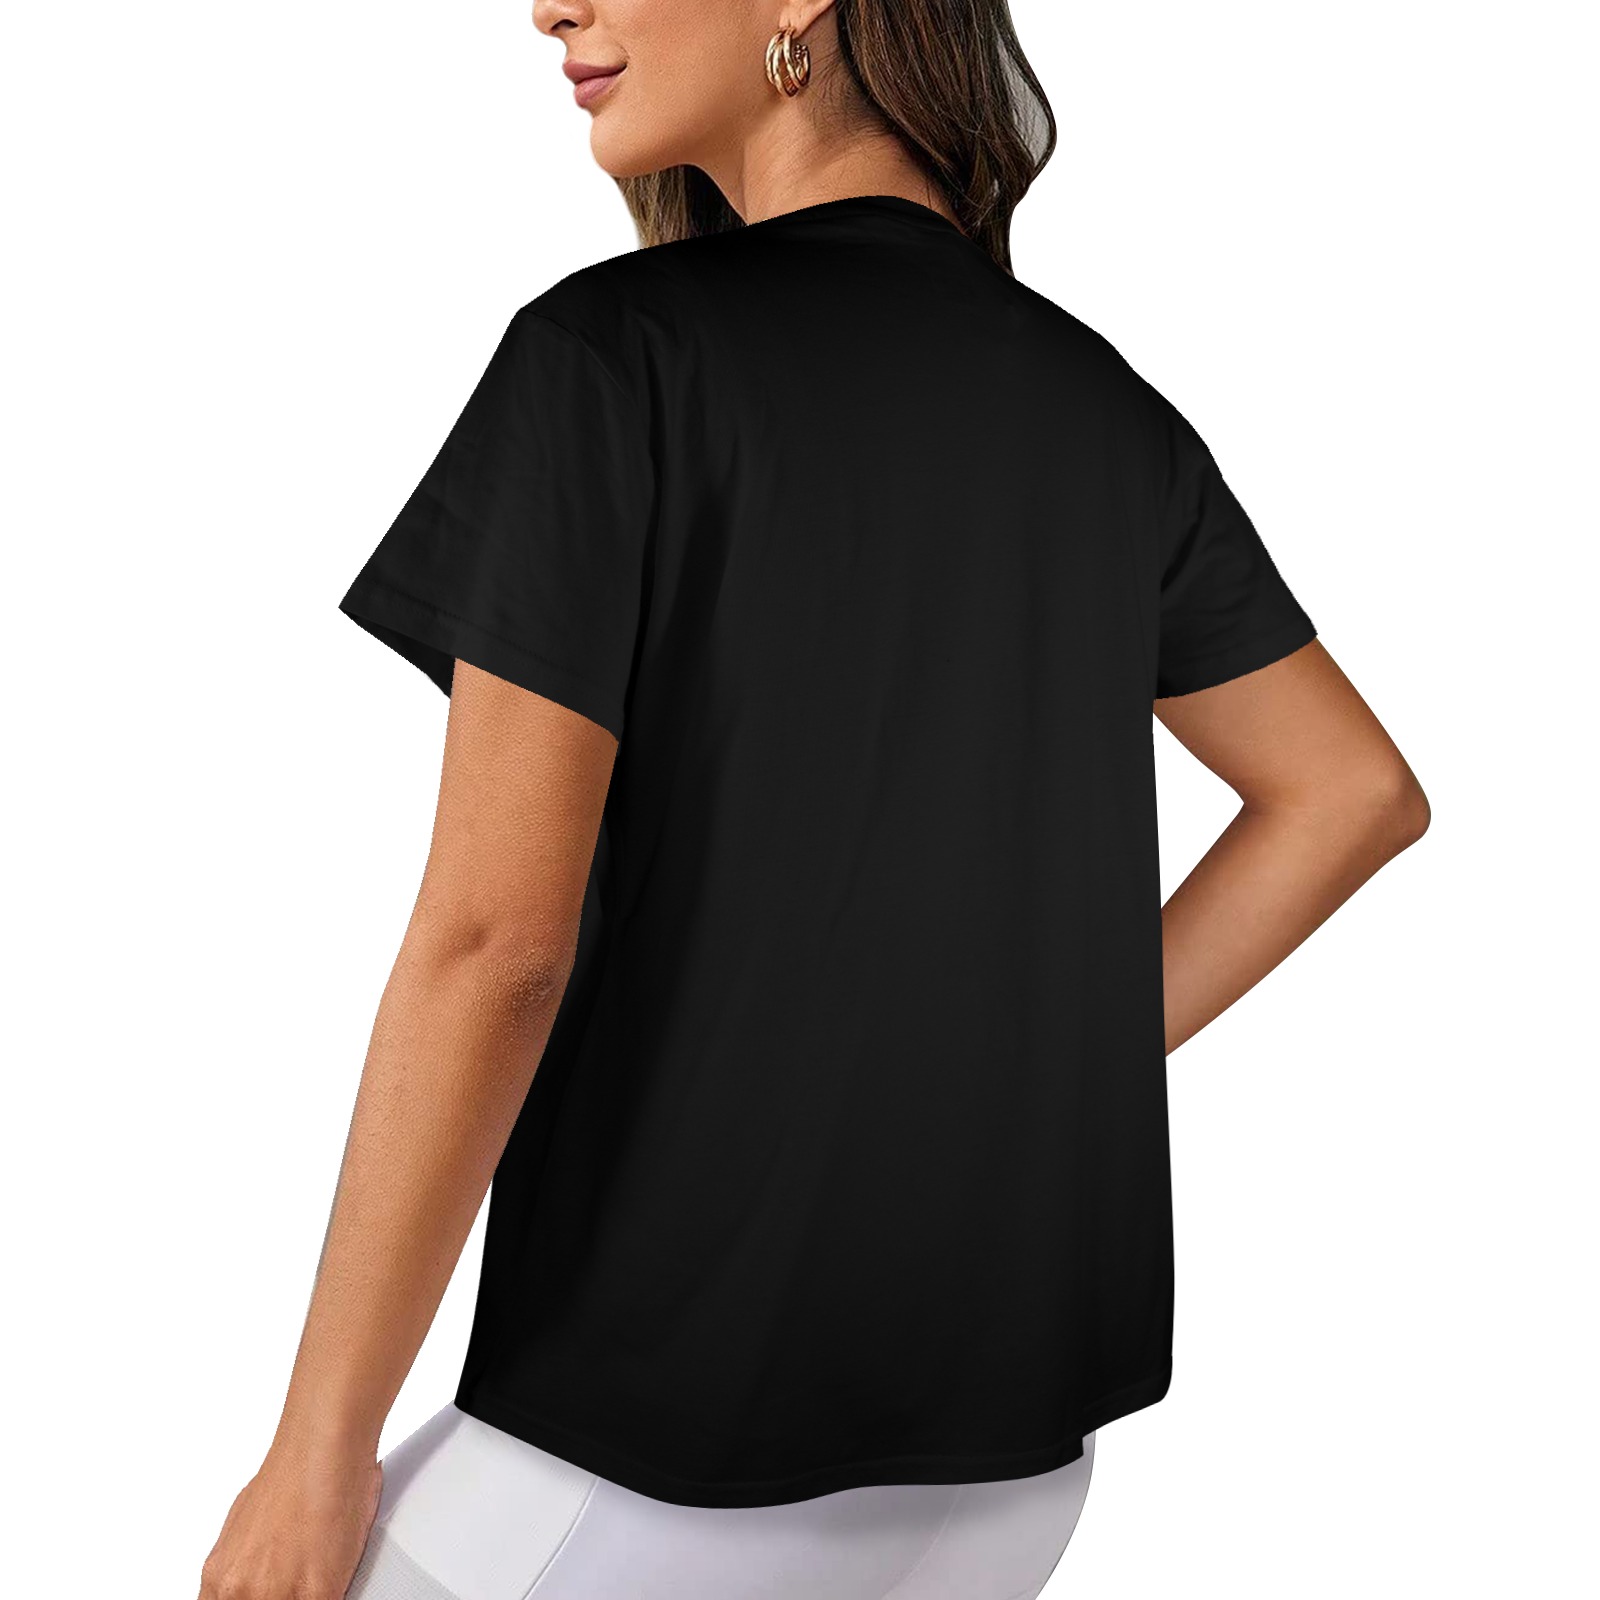 Jerusalem dechire jaune Women's Glow in the Dark T-shirt (Front Printing)